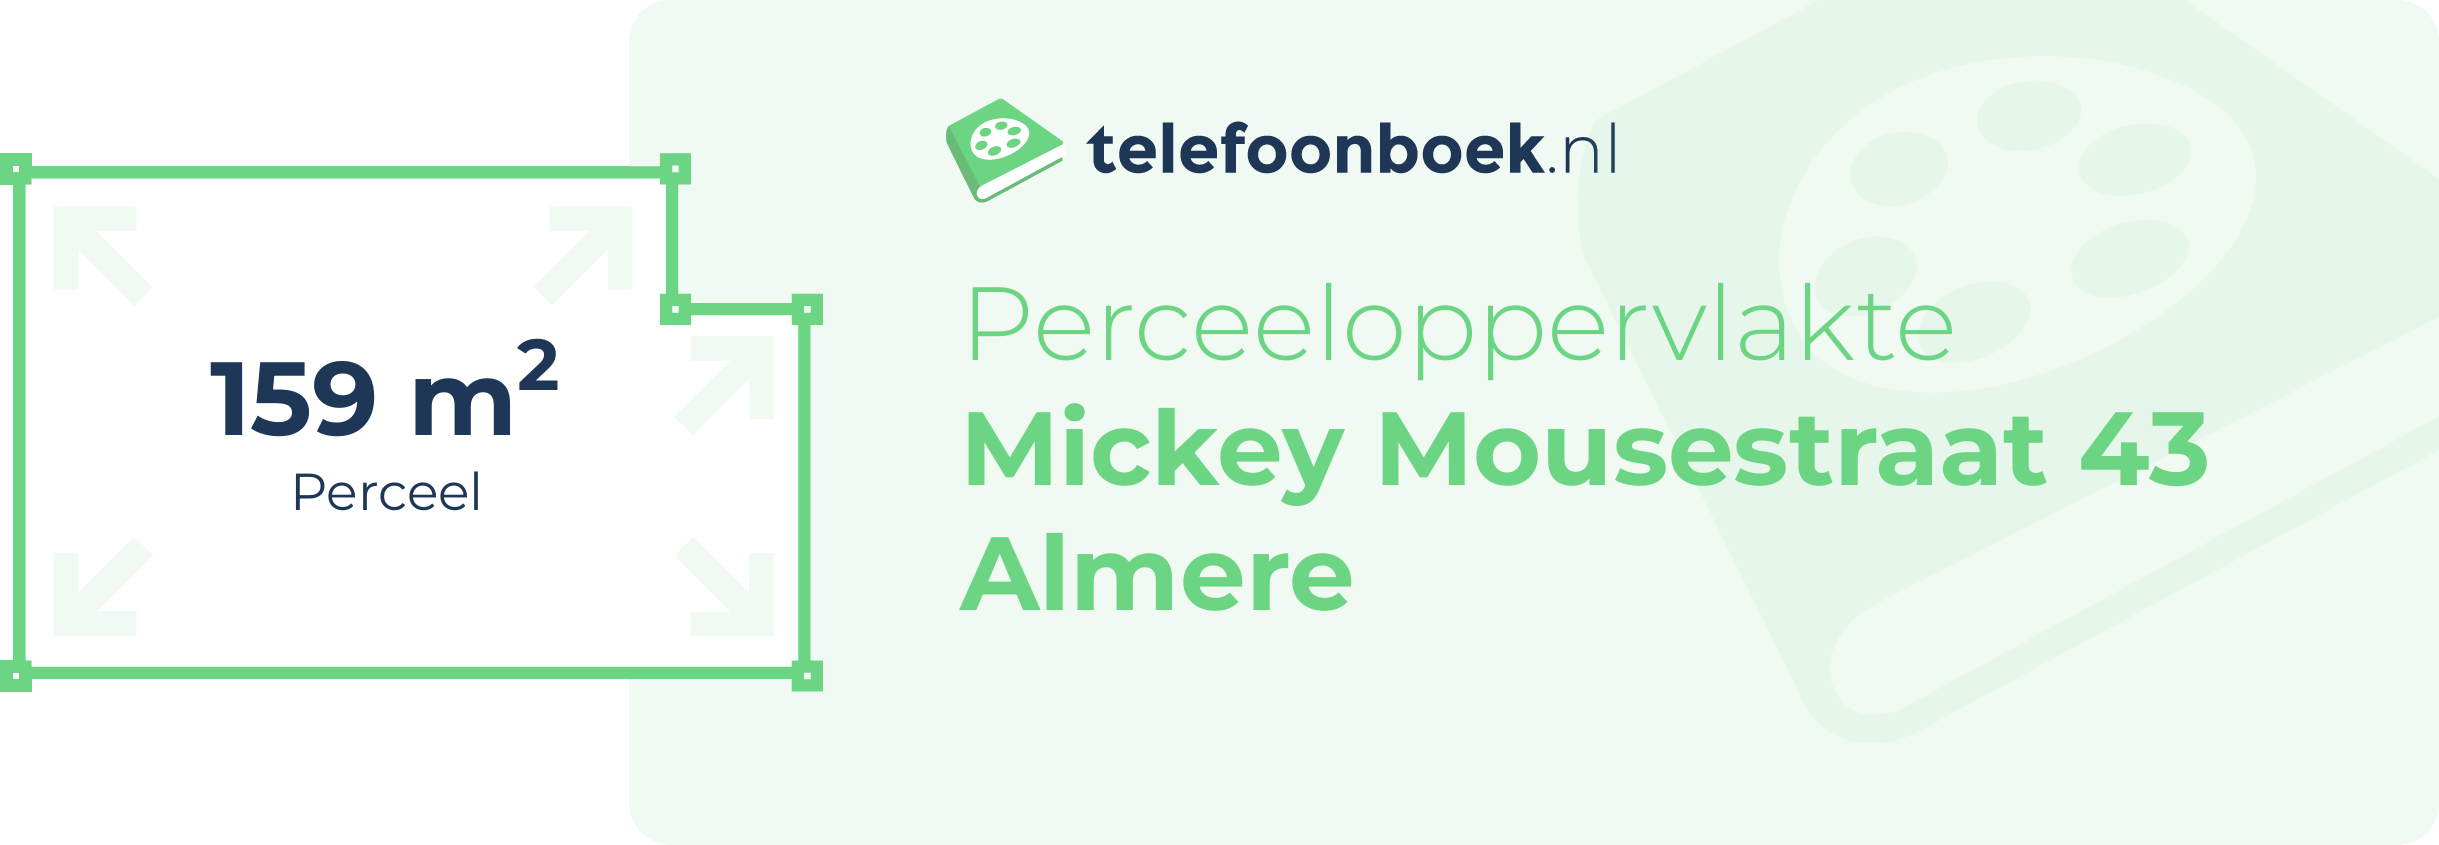 Perceeloppervlakte Mickey Mousestraat 43 Almere